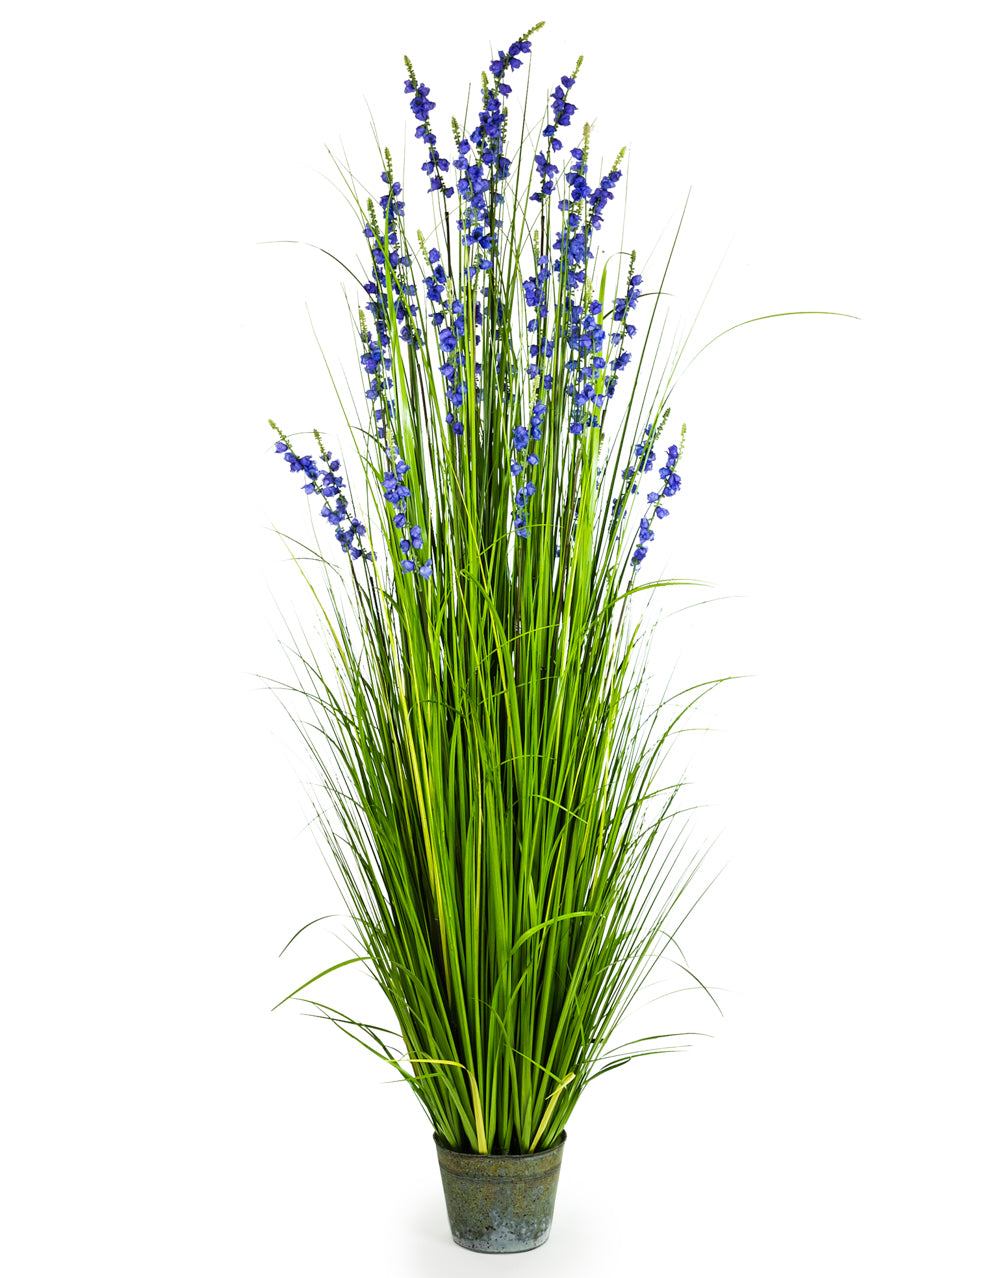 Ornamental Grasses in Galvanised Pot - Style 8